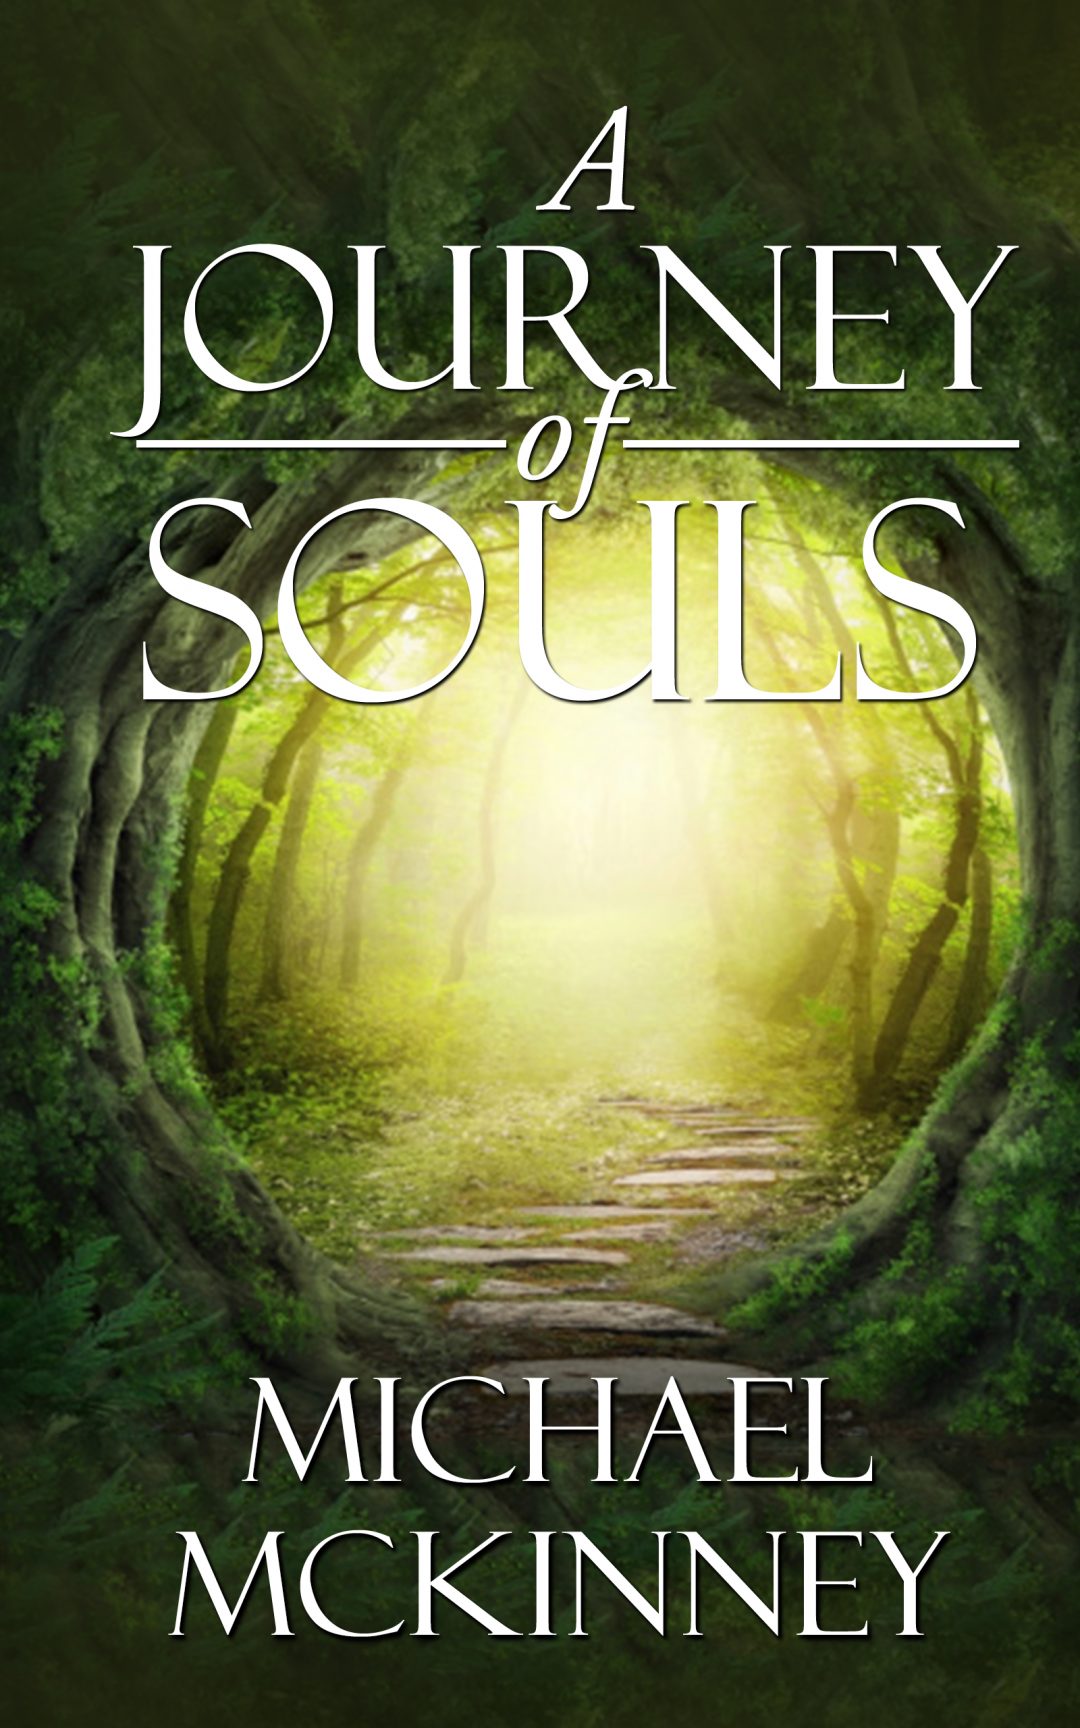 souls of journey